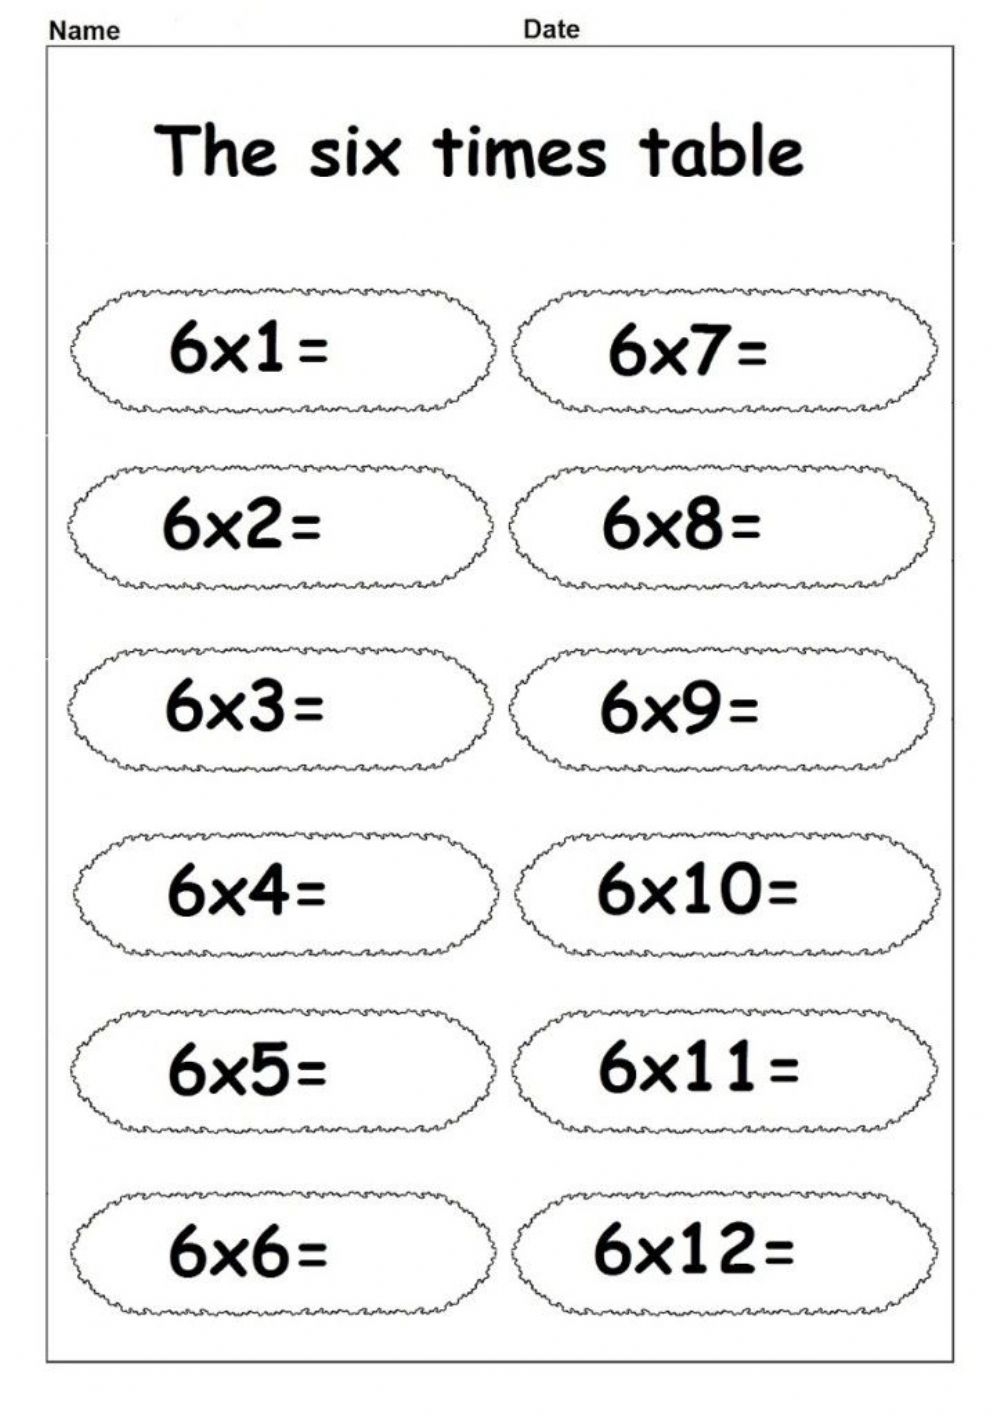 multiplication-worksheets-6-times-tables-printable-worksheets